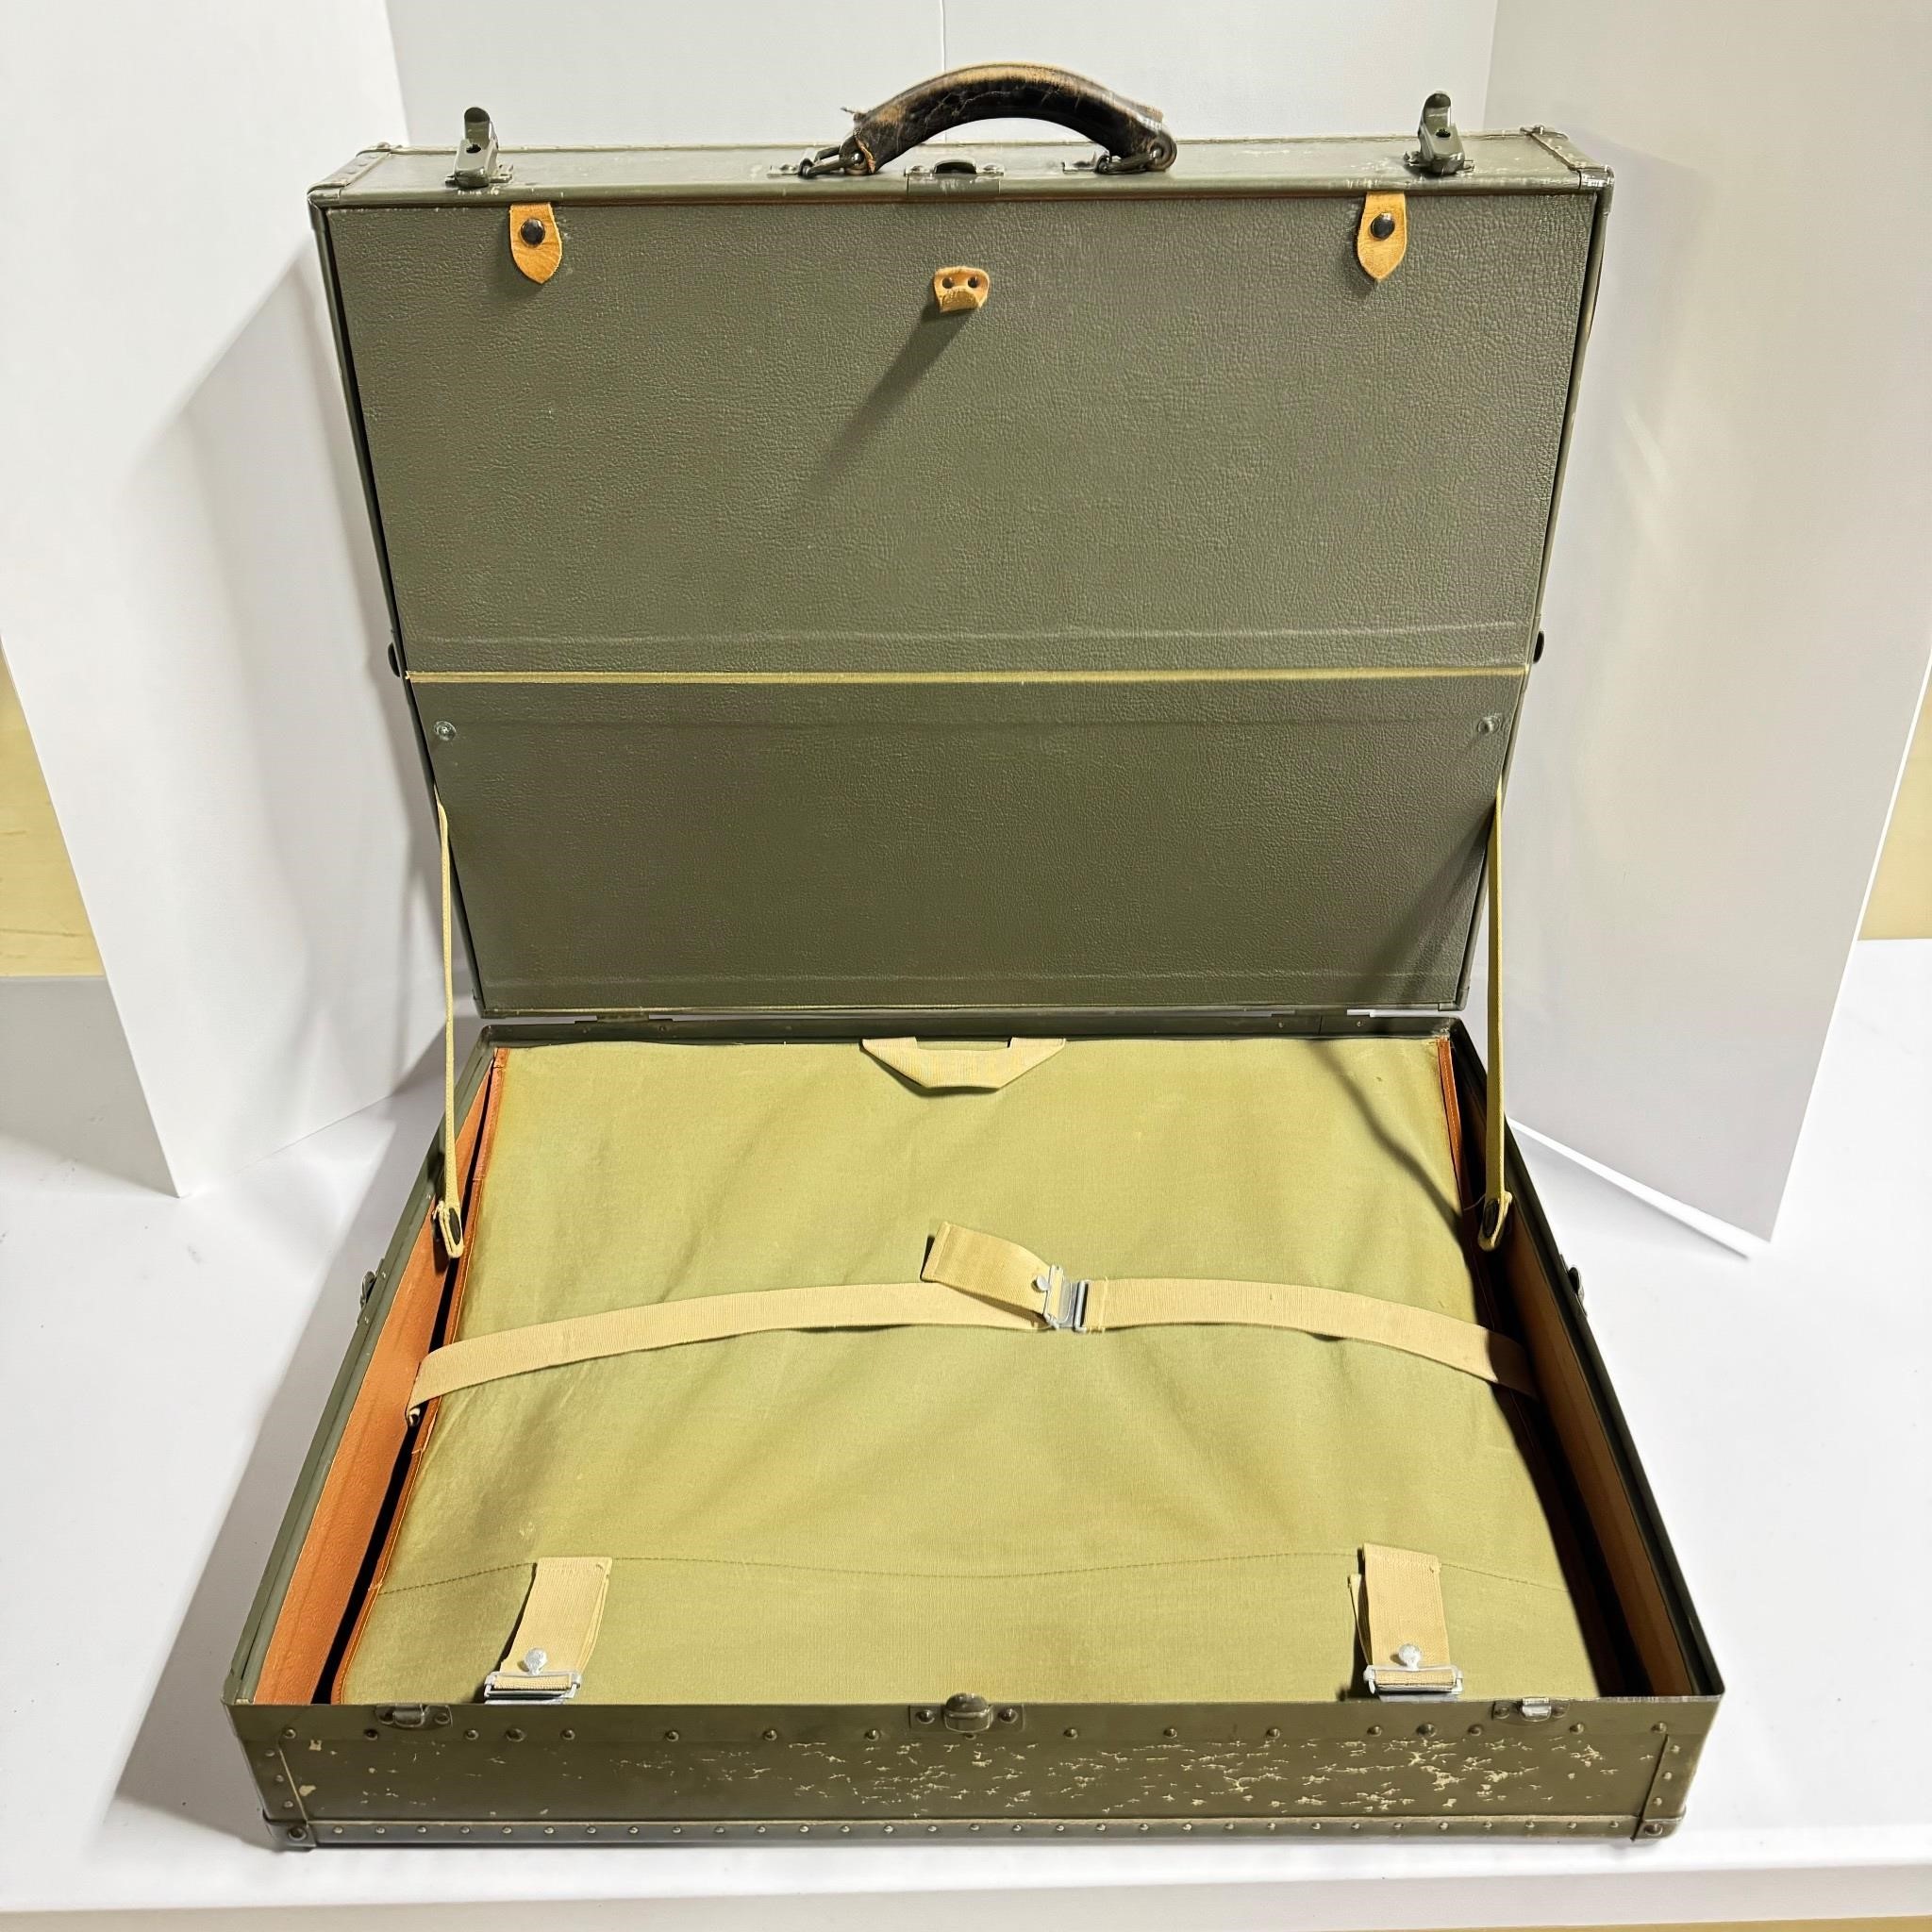 U.S. Navy Seapack Suitcase by Hartmann